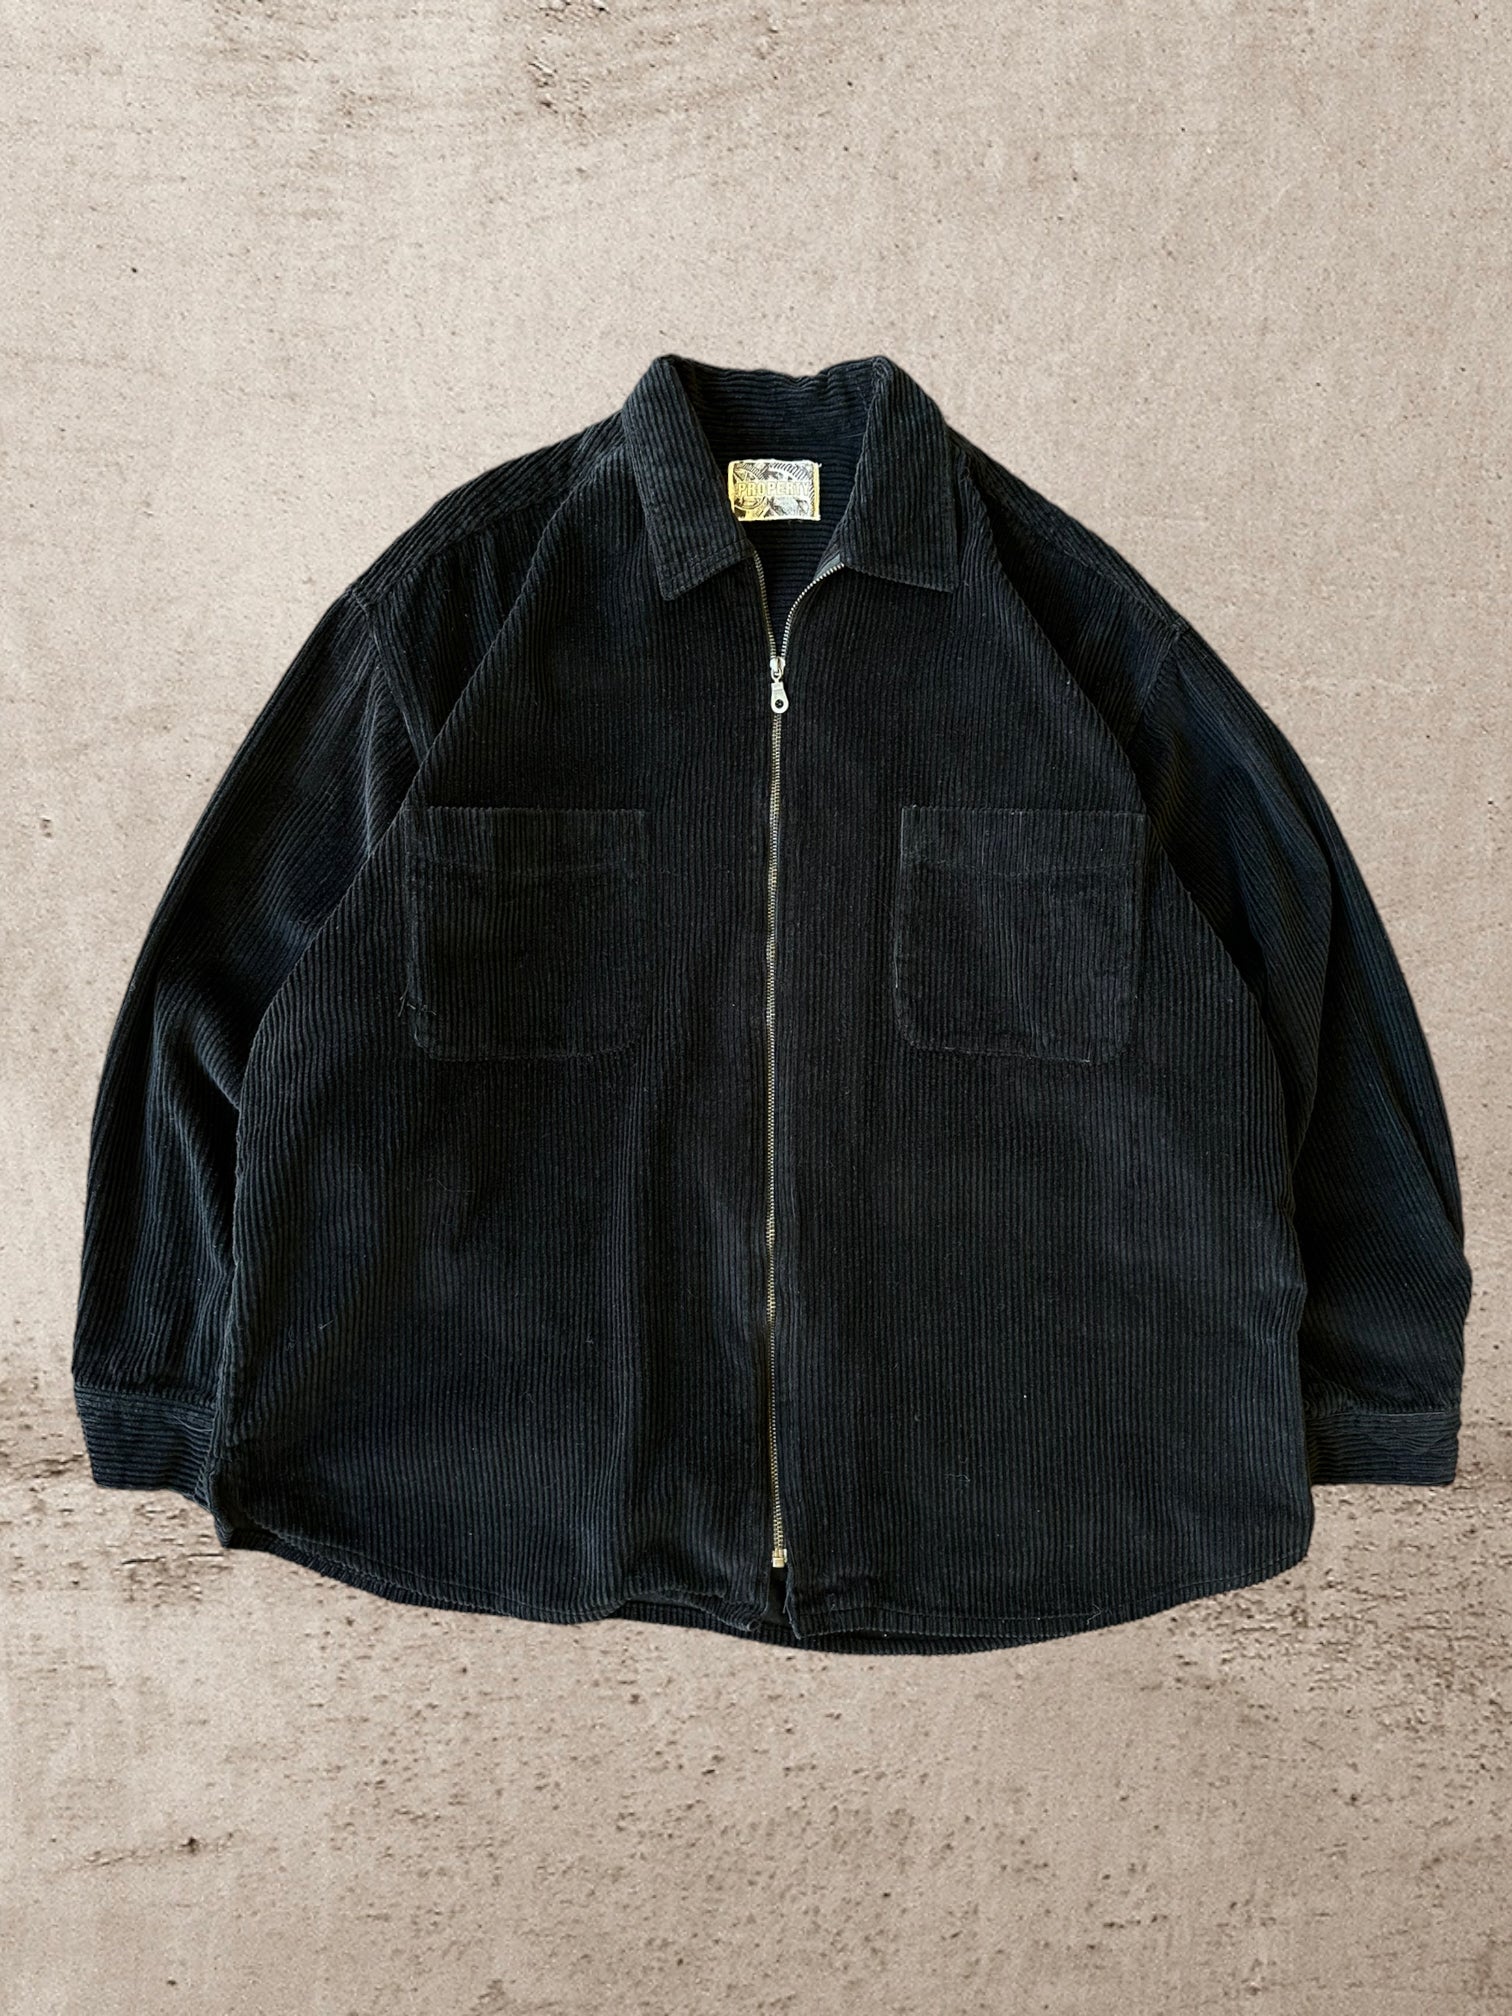 90s Property Black Corduroy Zip Up Jacket - XL